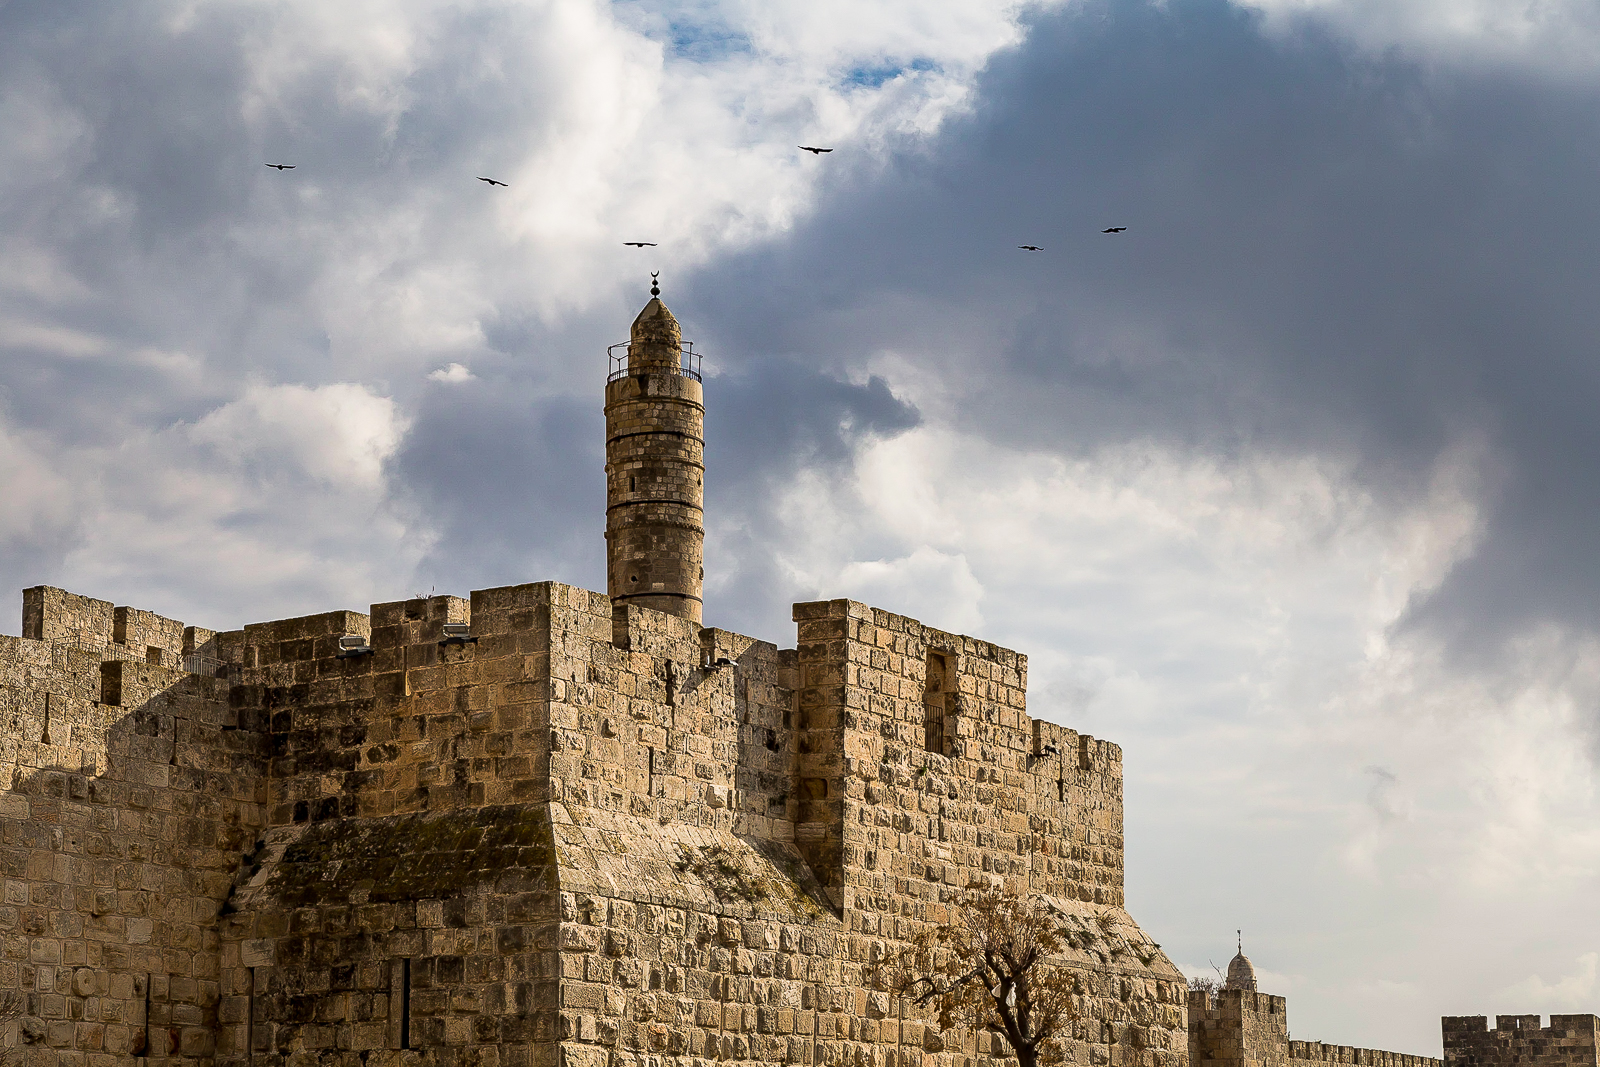 Walls of the old city of Jerusalem